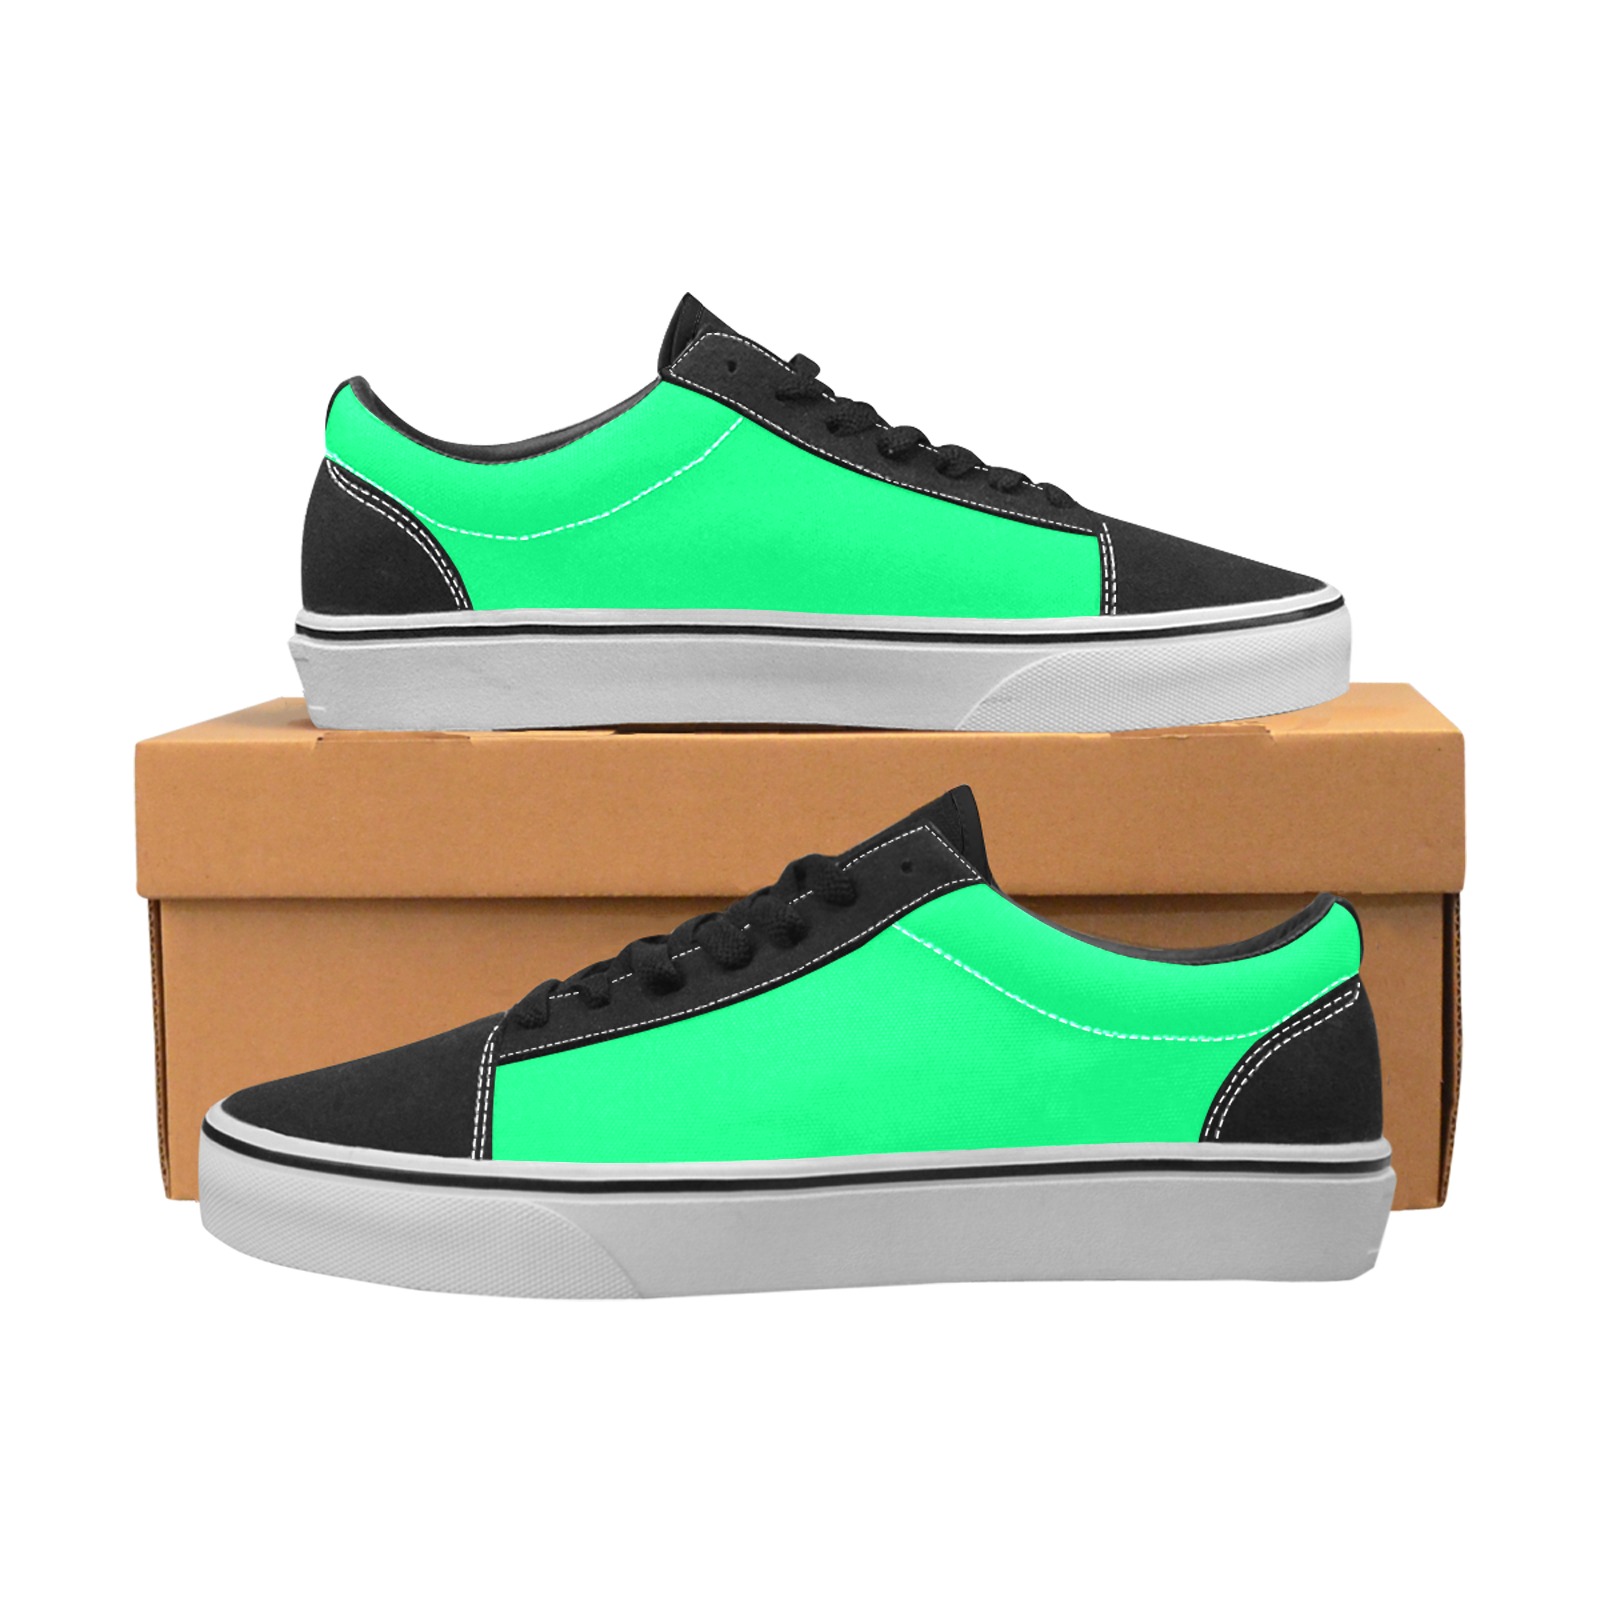 color spring green Men's Low Top Skateboarding Shoes (Model E001-2)